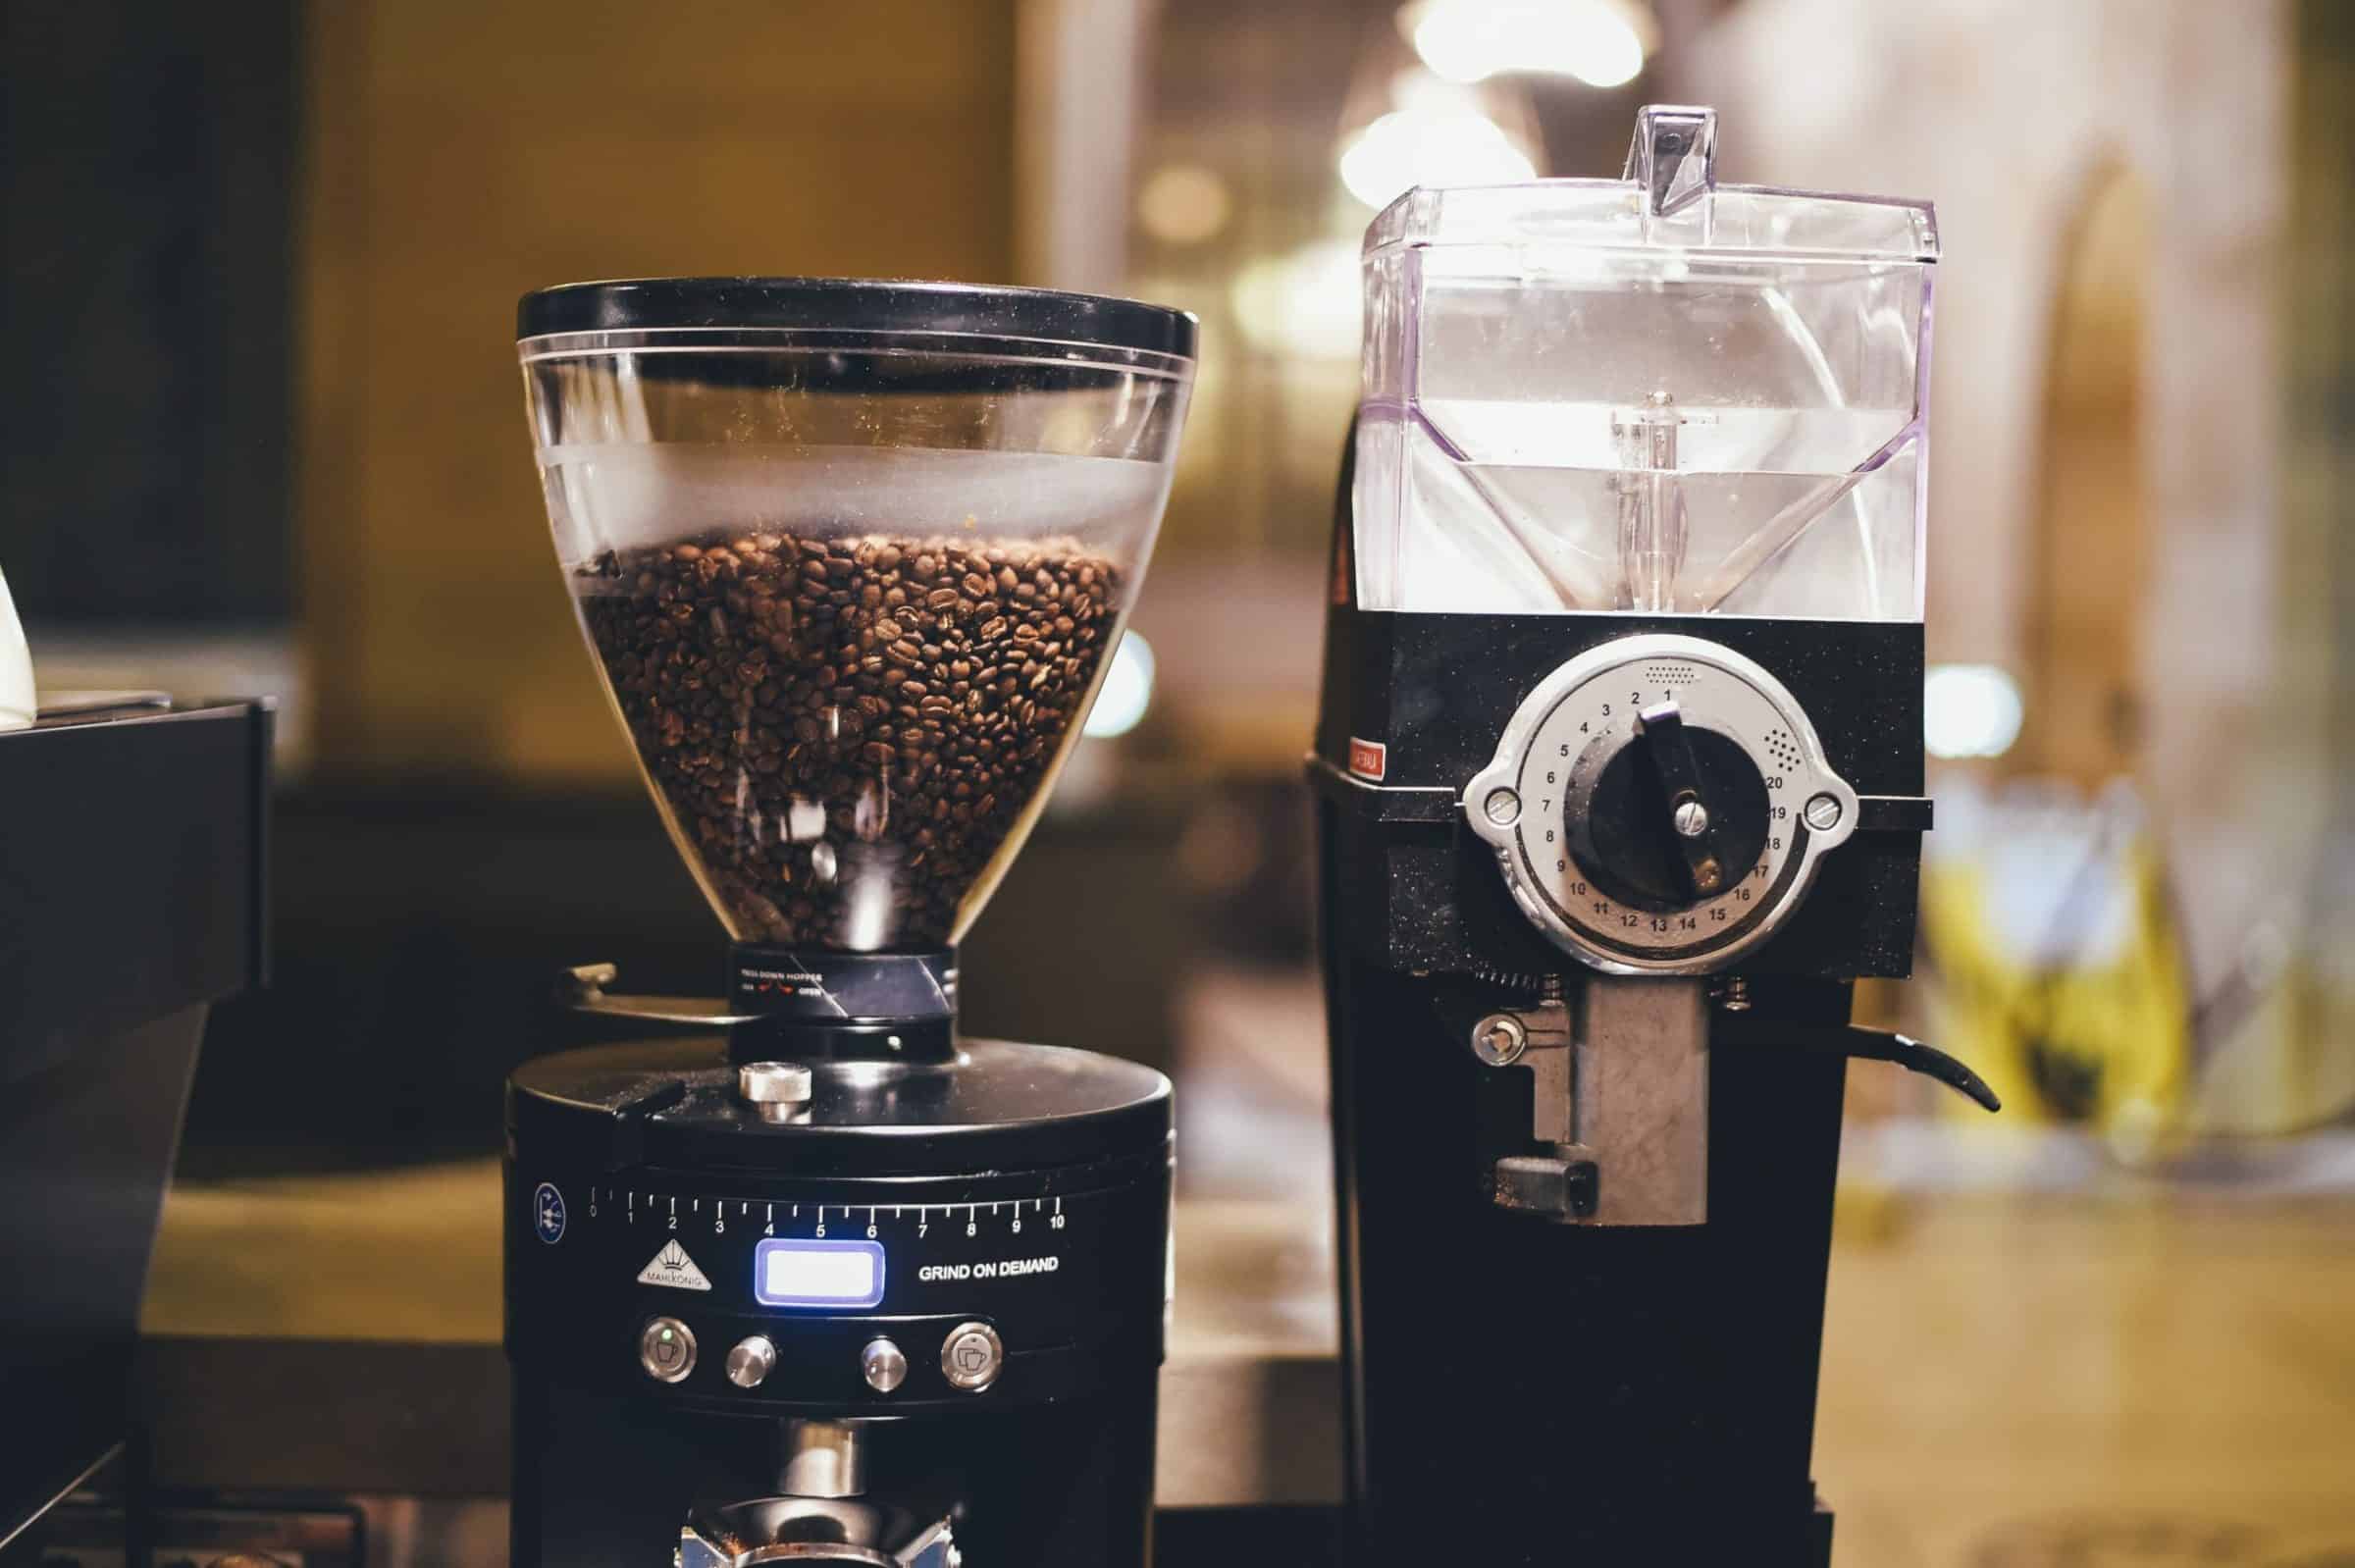 Coffee machine grinding beans